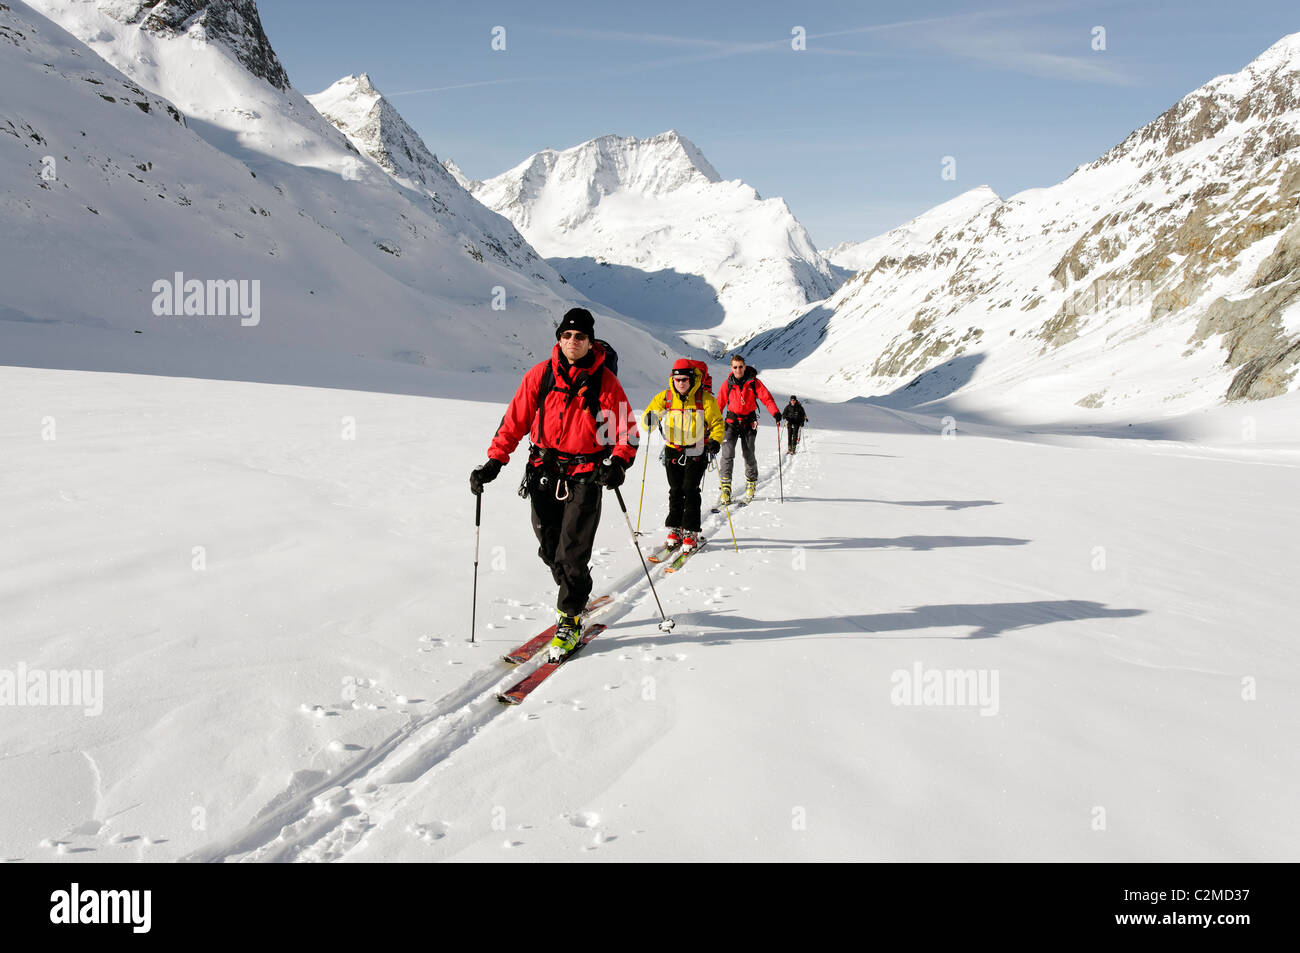 Ski touring on the Otemma Glacier on the Haute Route, Switzerland. Stock Photo